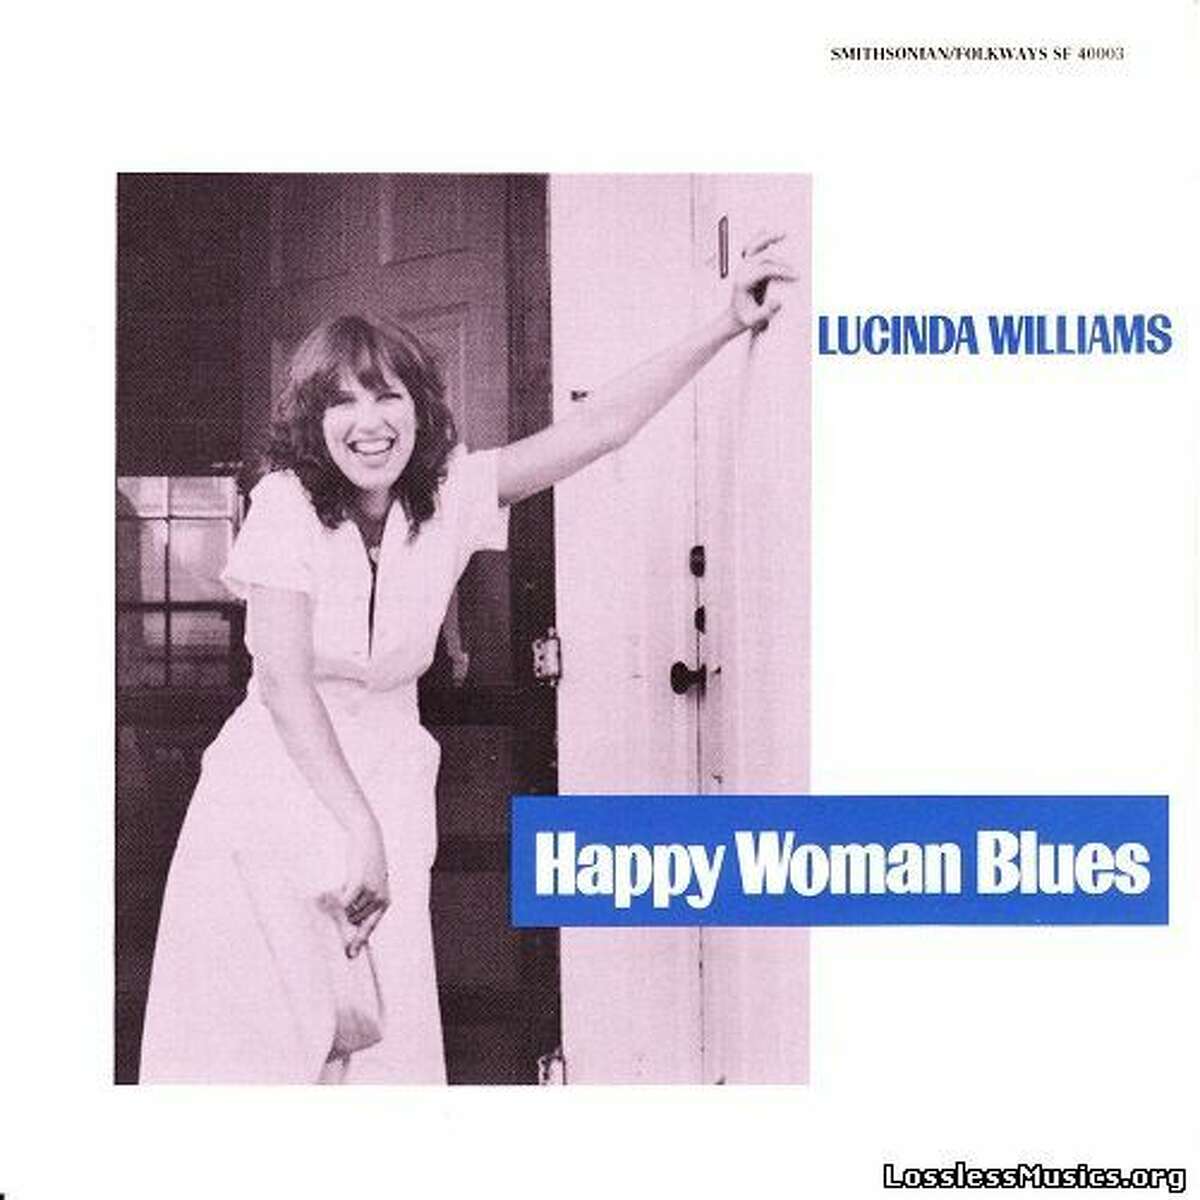 Люсинда Уильямс. Lucinda Williams albums. Lucinda Williams CD albums обложка. Lucinda Williams в молодости.